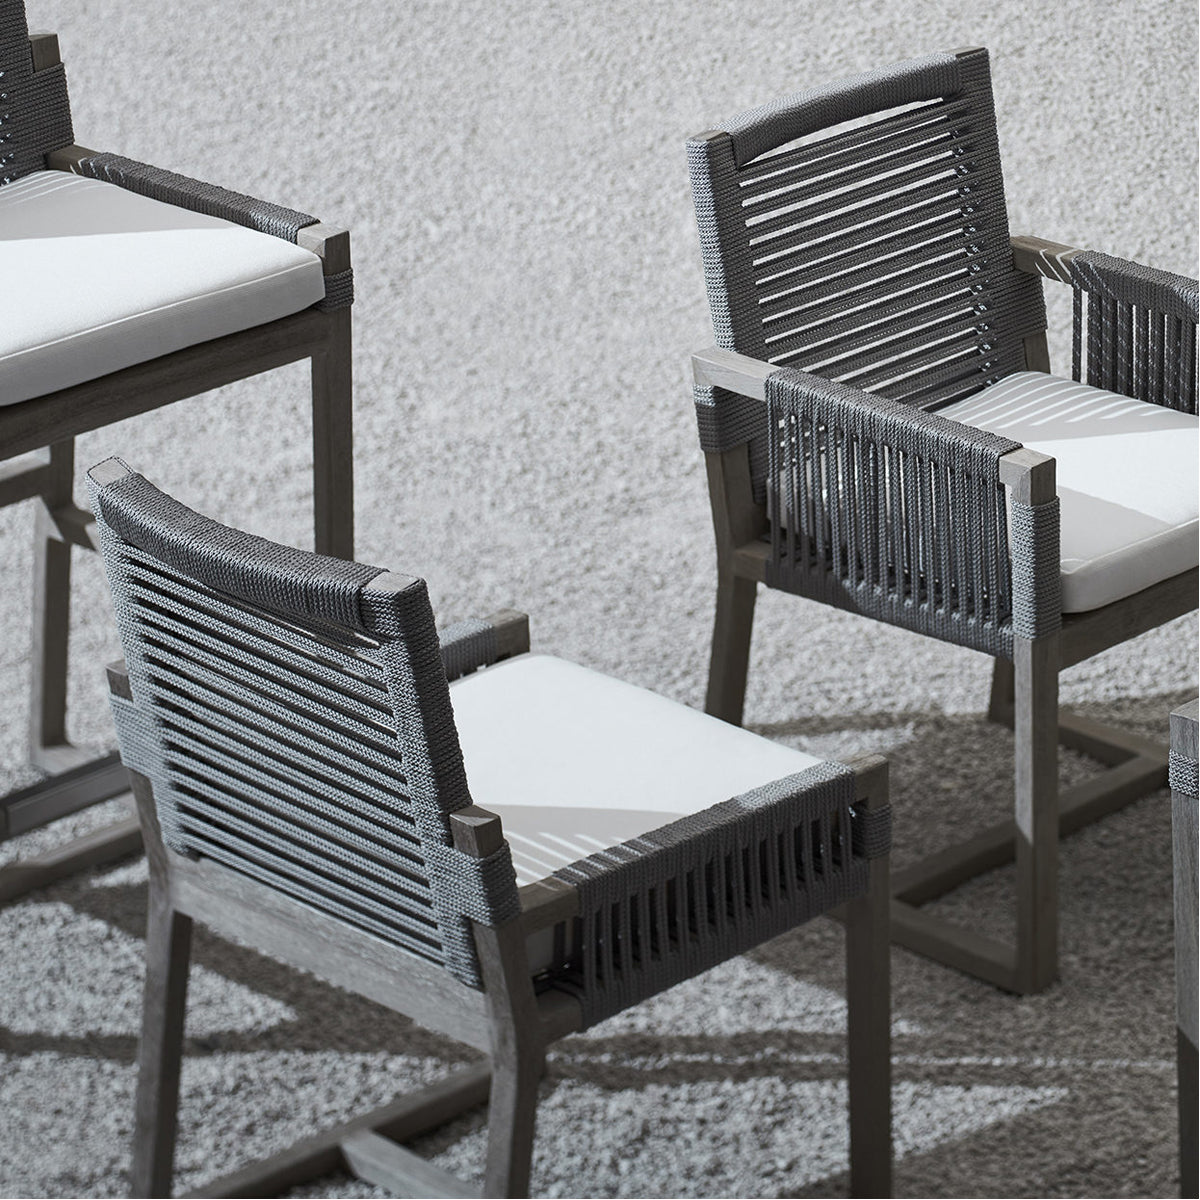 Palecek San Martin Outdoor Side Chair, Grey